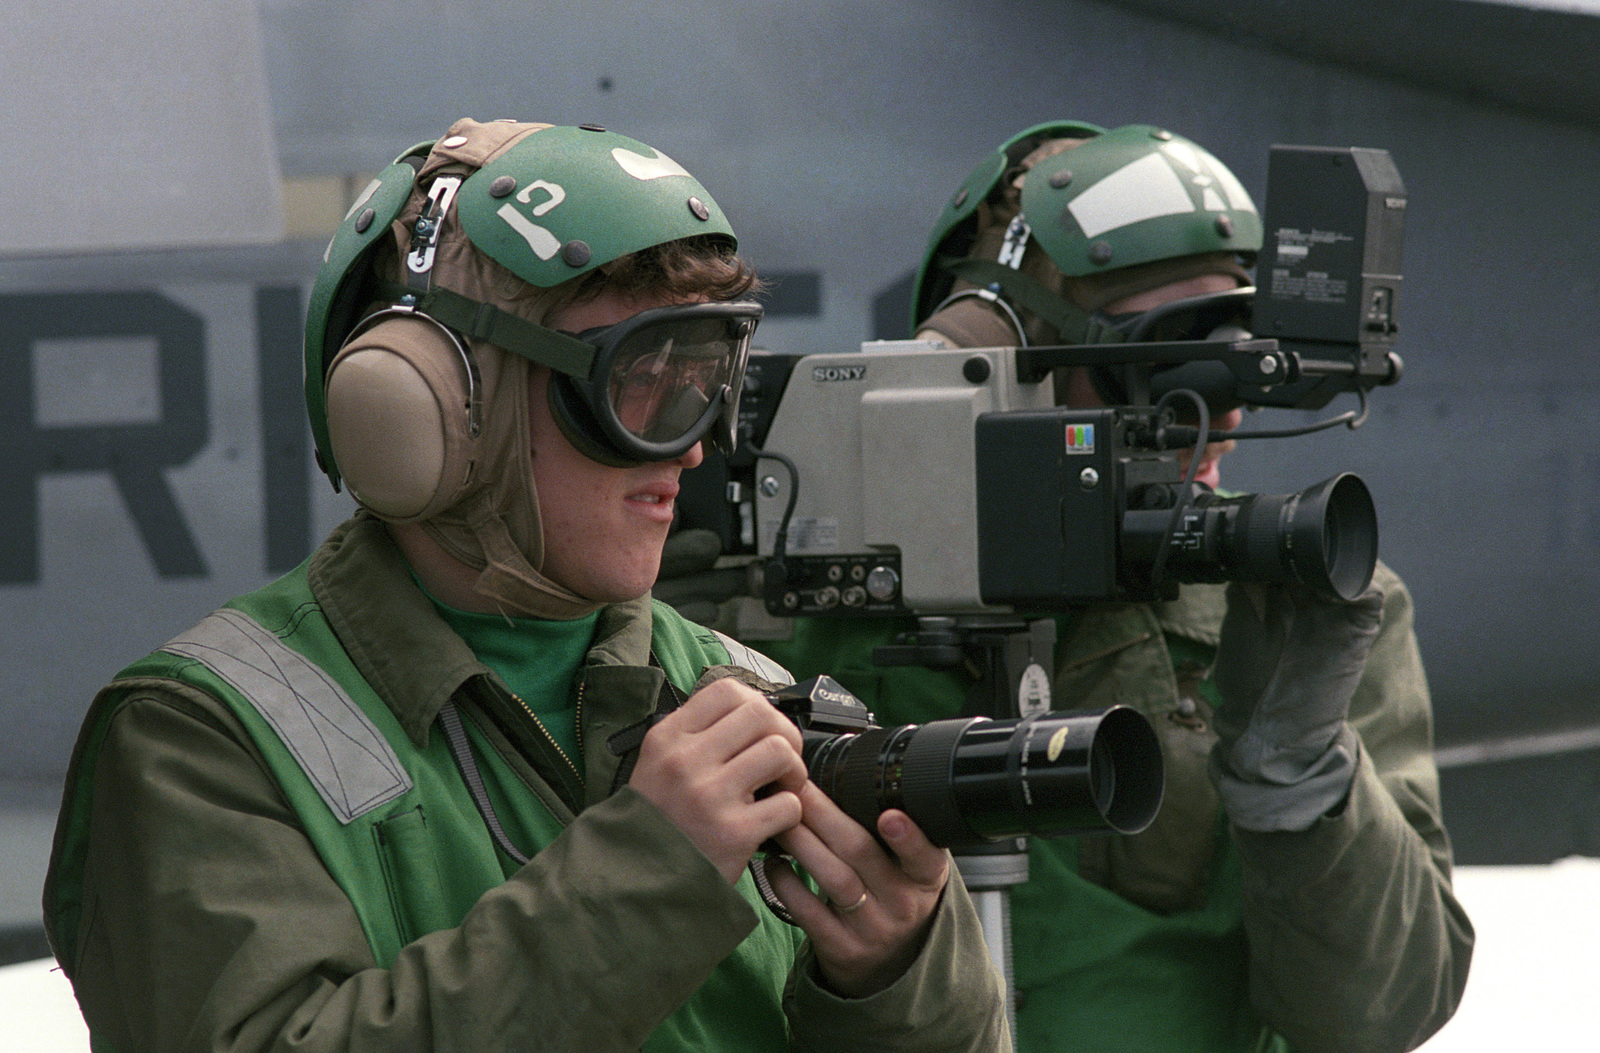 photographers-mates-videotape-and-photograph-flight-deck-operations-aboard-072356-1600.jpg